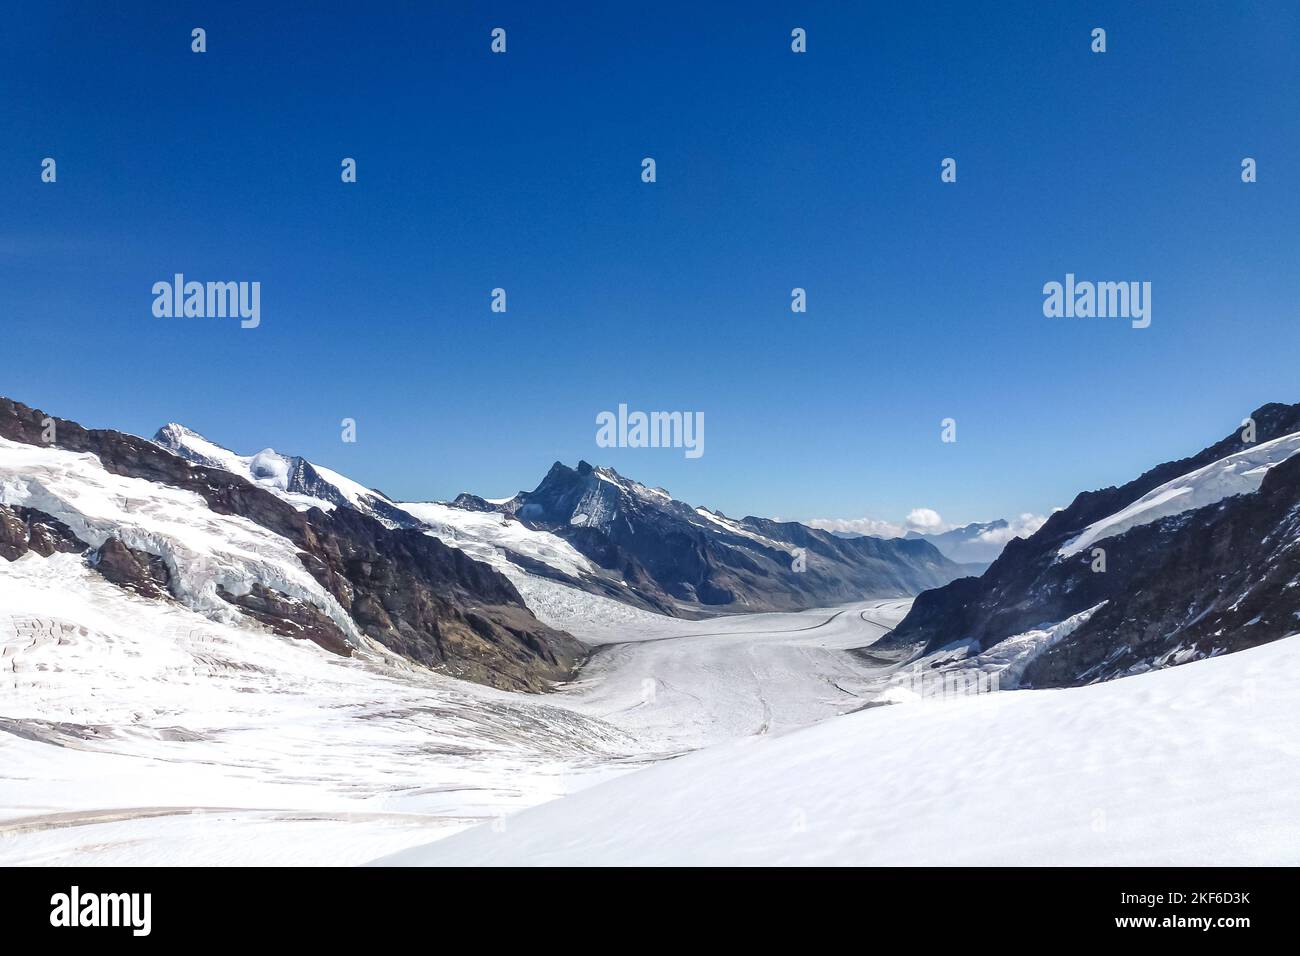 Descripción: Vista panorámica del glaciar Aletsch al mediodía. Gira Jungfrau Hight, Berner Alpen, Schweiz, Europa. Foto de stock